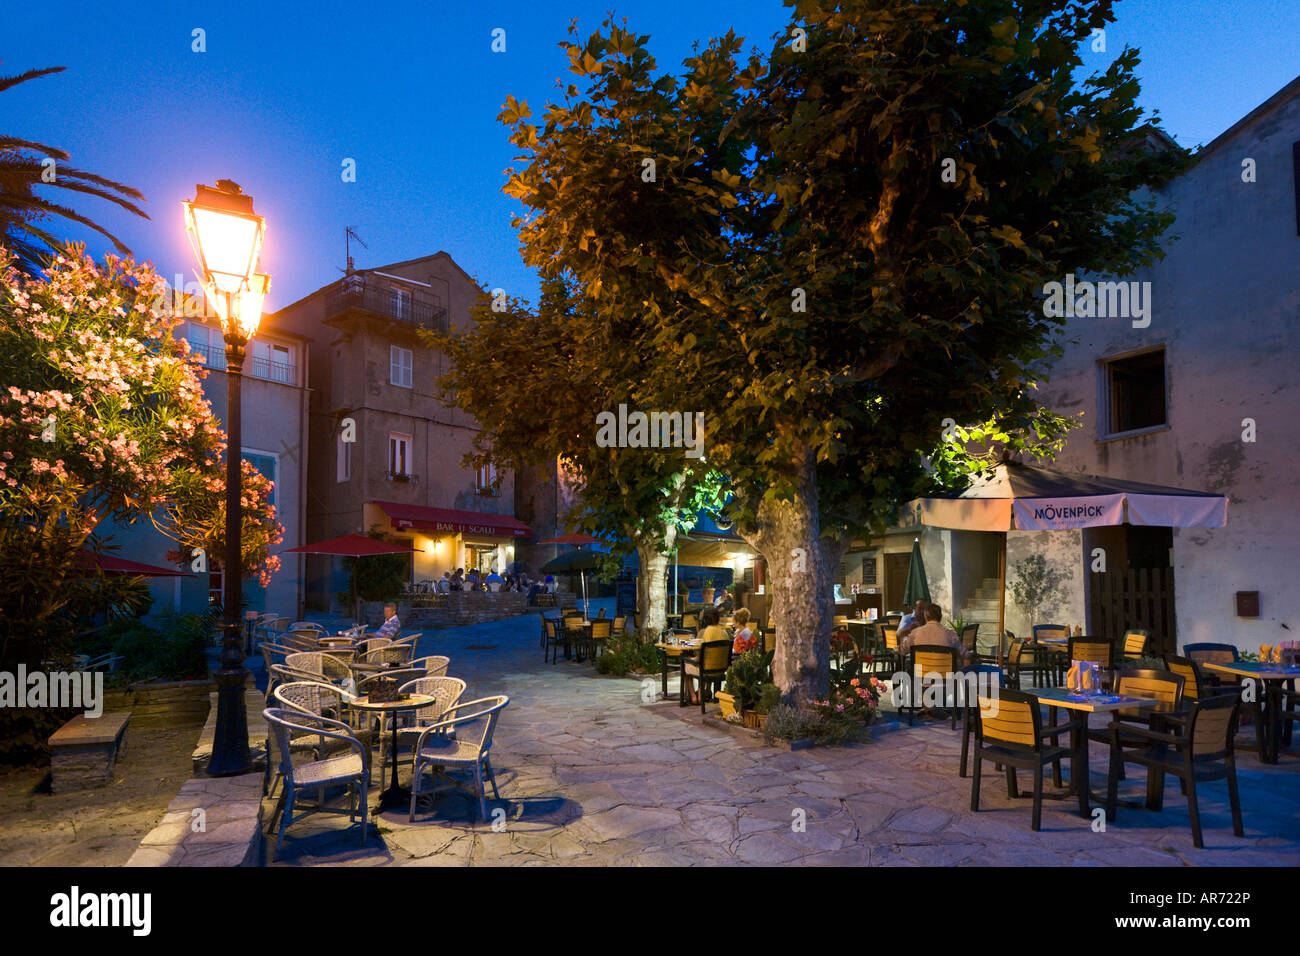 Cafe bar at night, Erbalunga, Cap Corse, Corsica, France Stock Photo ...